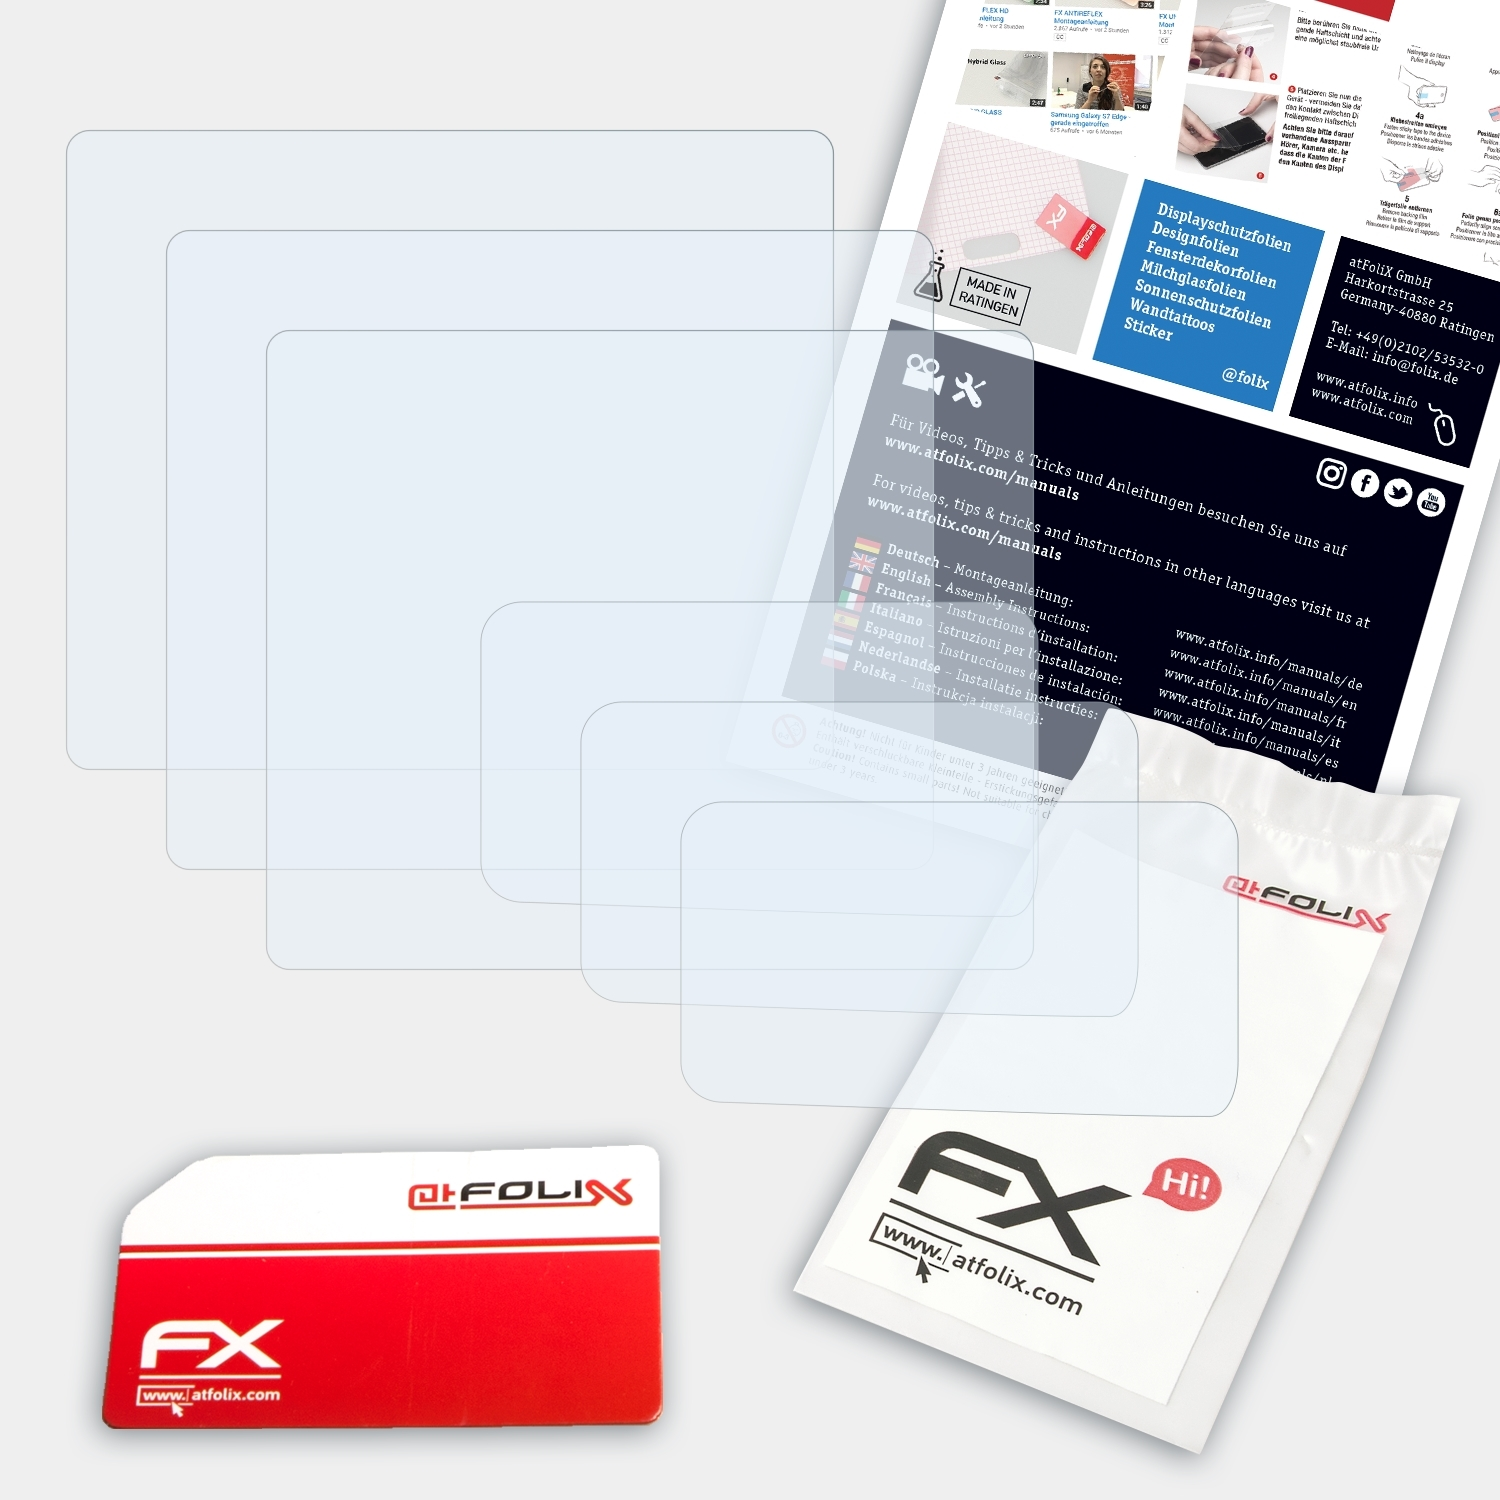 3x ATFOLIX Displayschutz(für Pentax K10D) FX-Clear